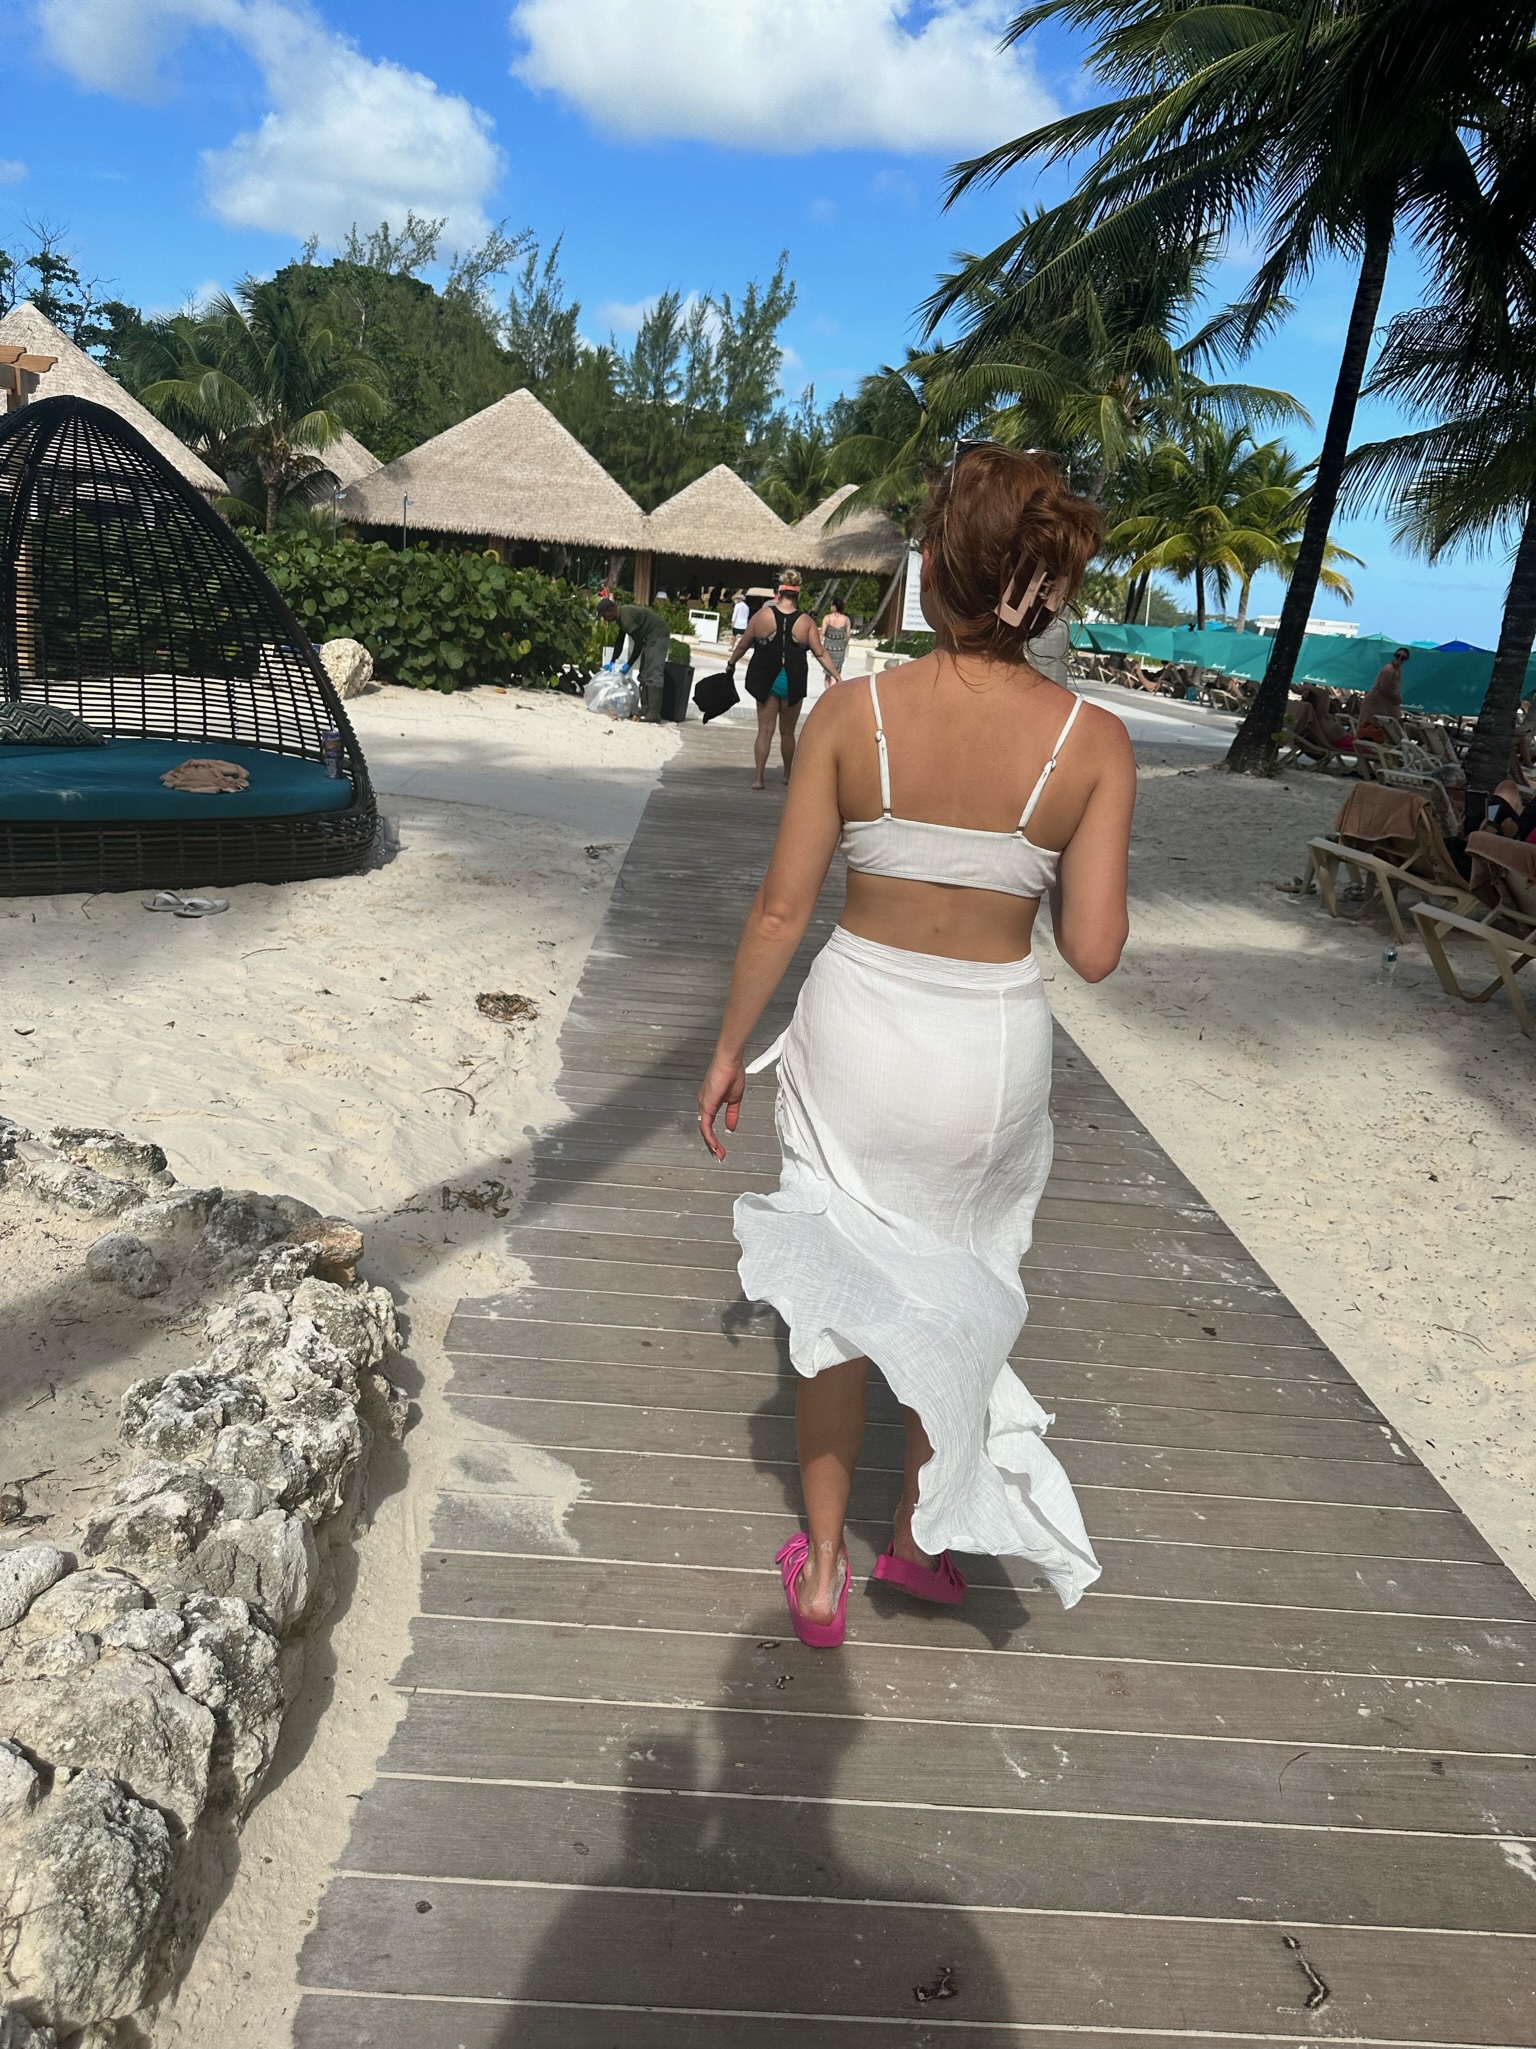 Sandals Barbados Honeymoon Travel Planner 2 Travel Anywhere